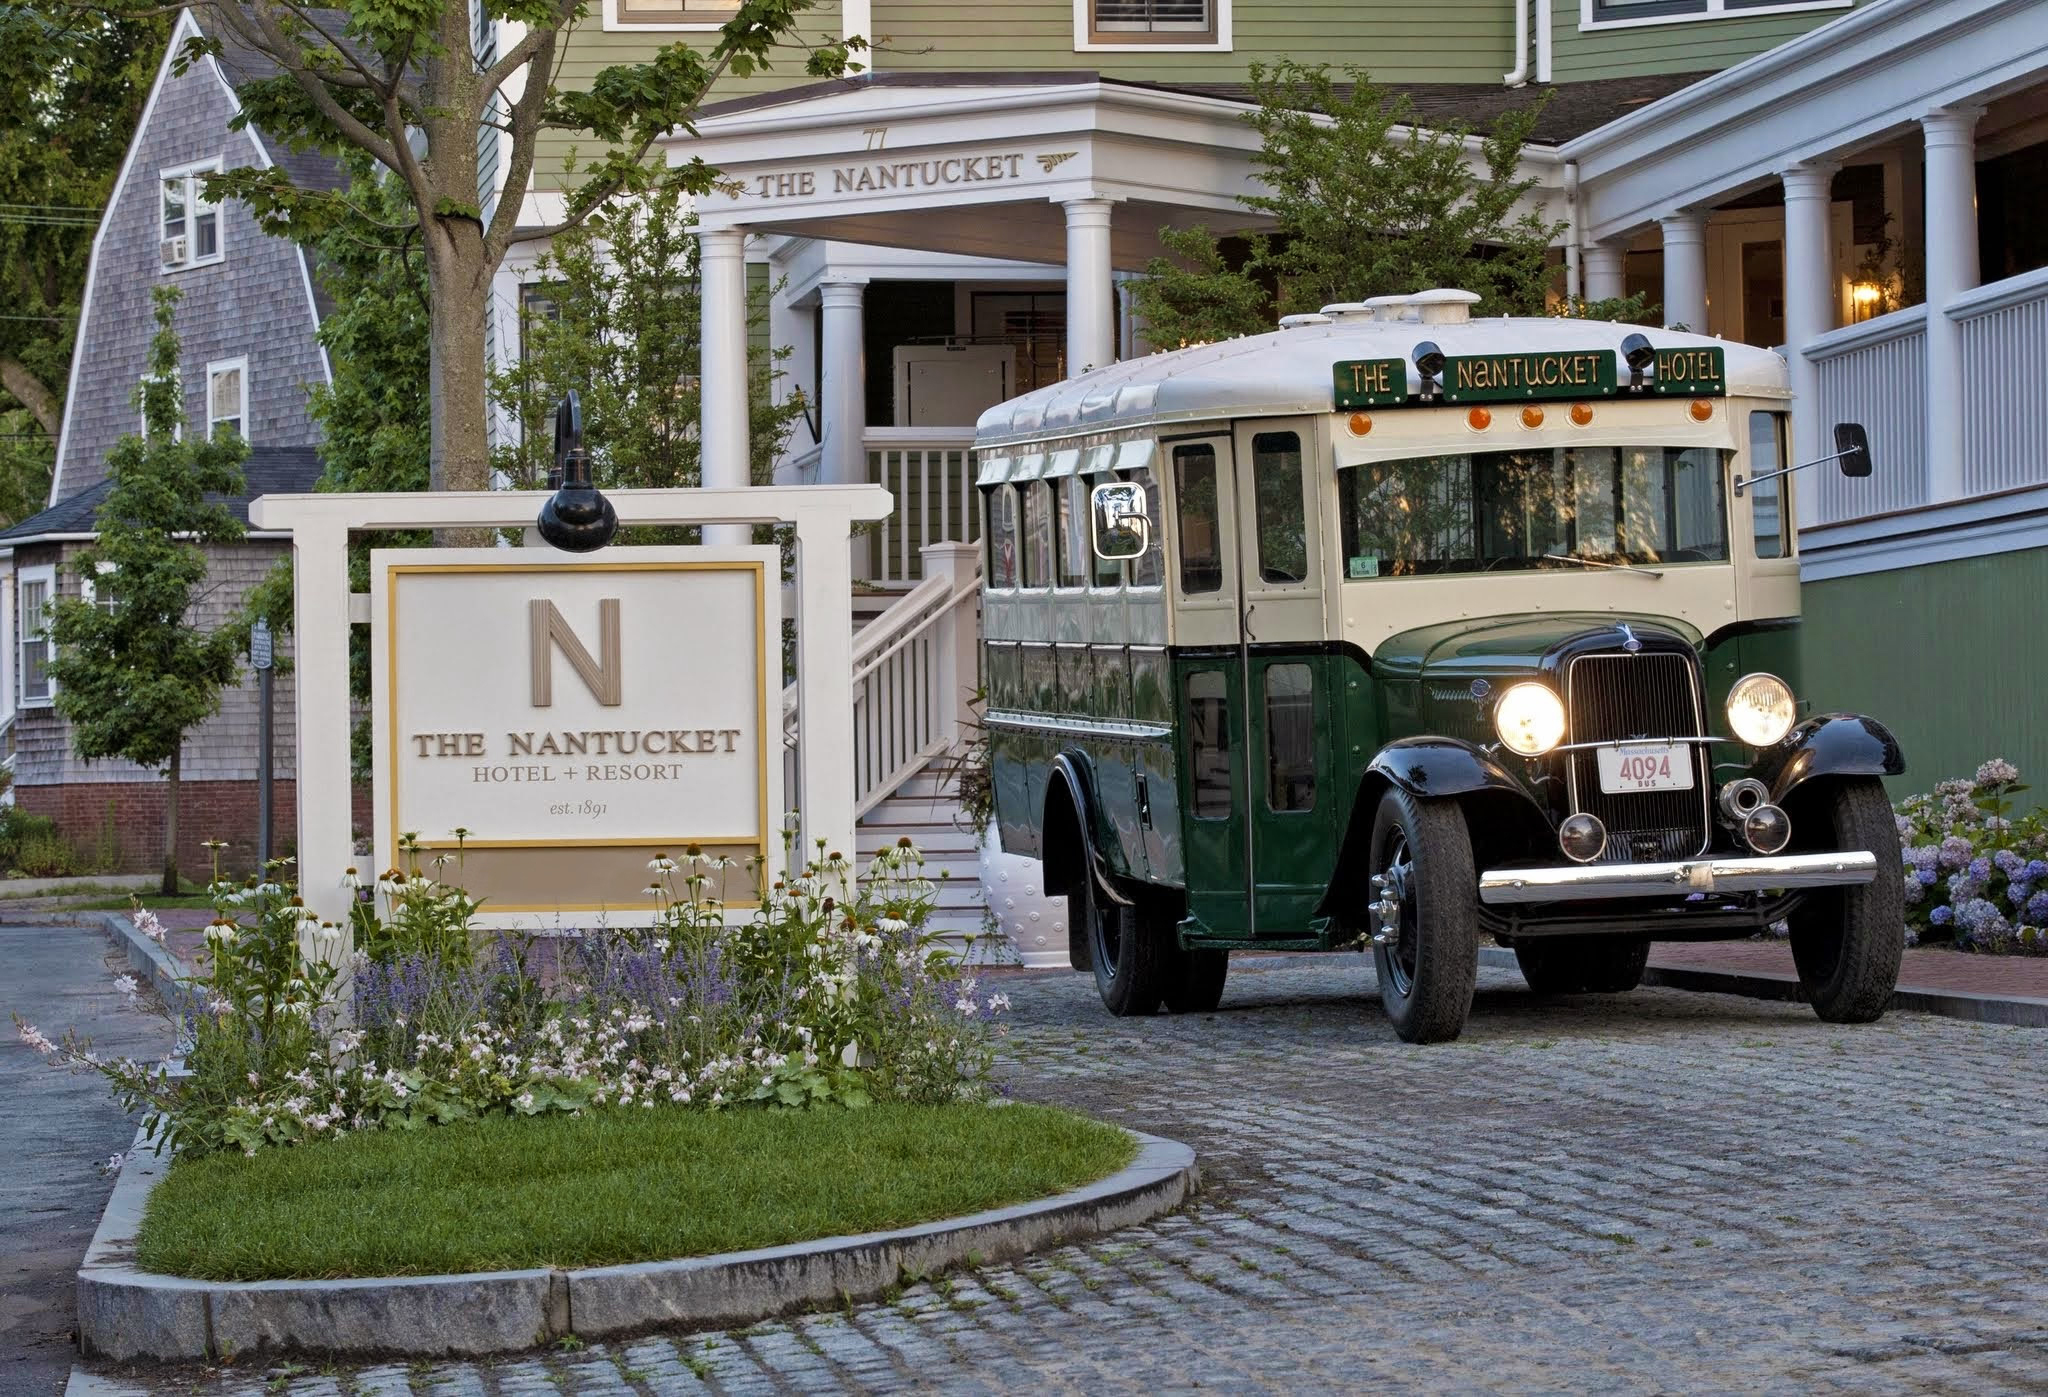 Photo of The Nantucket Hotel + Resort, Nantucket, MA